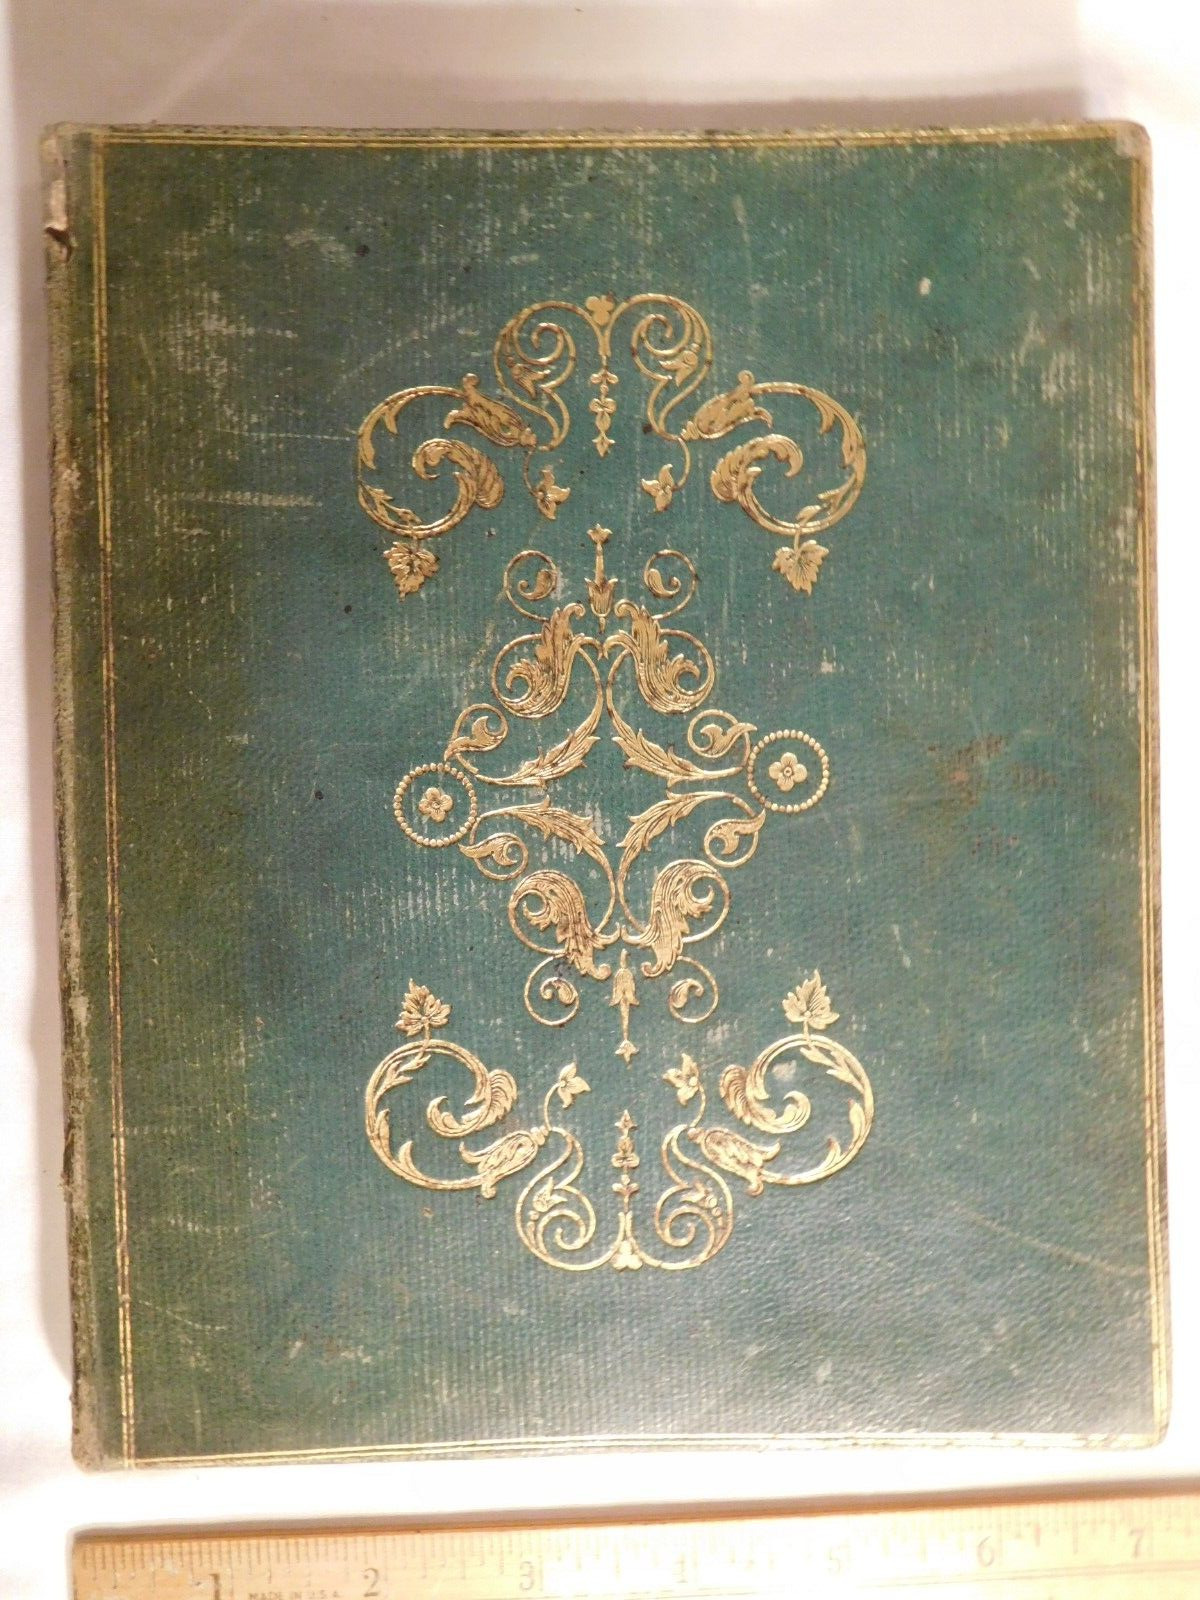 RARE Dubuque, Iowa Antique 1846-'76 Album G. Karrick, R.Chaney Important History